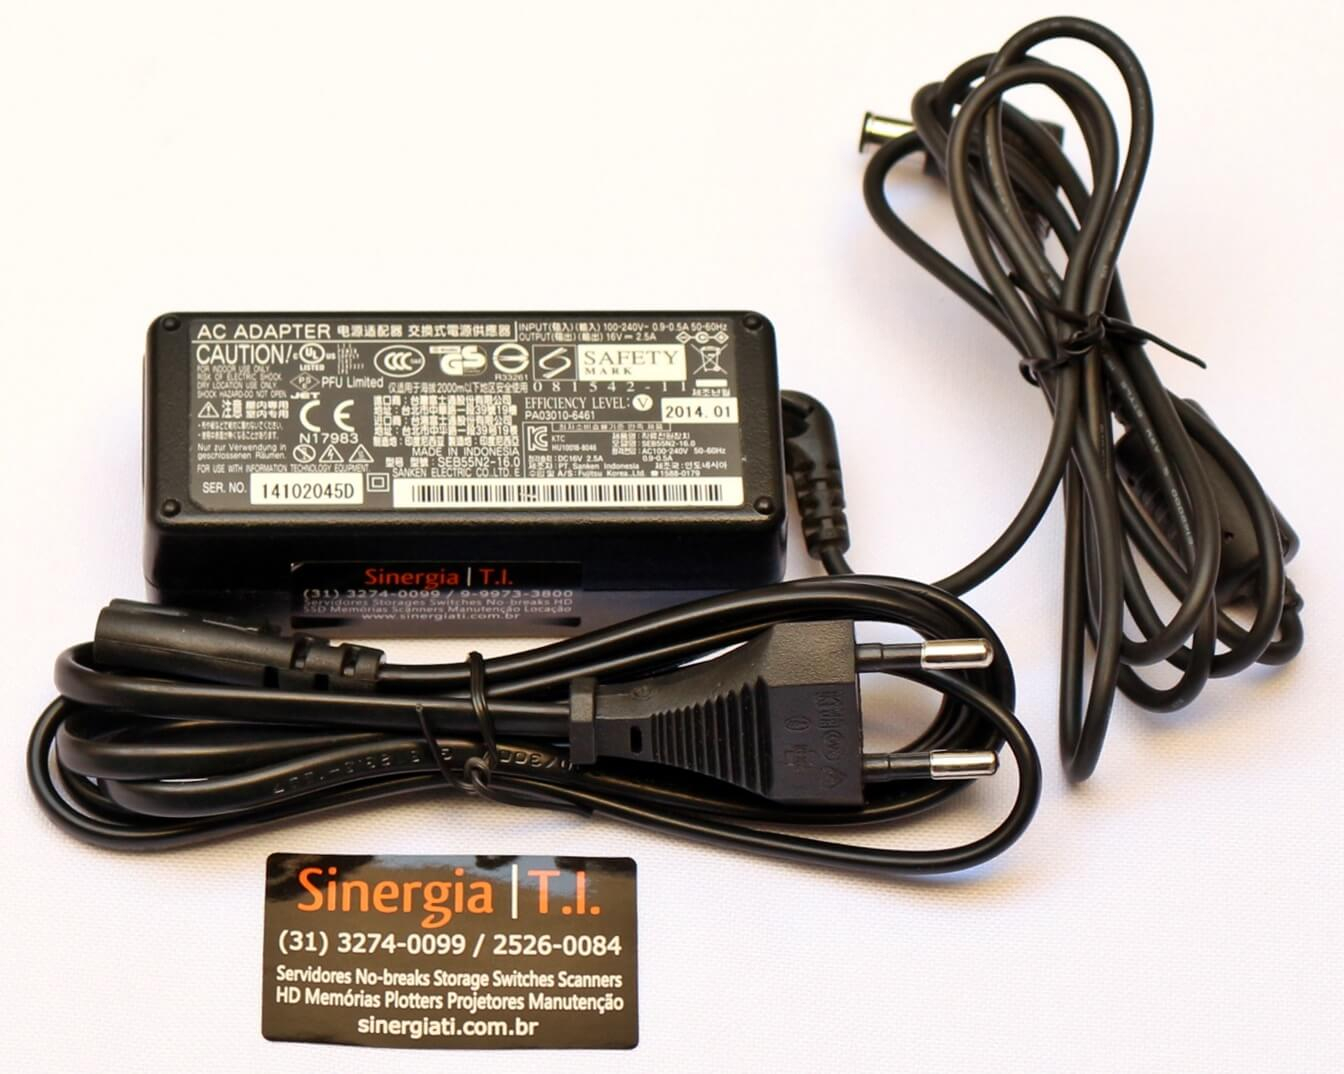 Fonte Original AC Adapter para Scanner Fujitsu modelo iX500 SV600 iX1400 iX1500 iX1600 S500 S510 - PN: PA03010-6461 pronta entrega